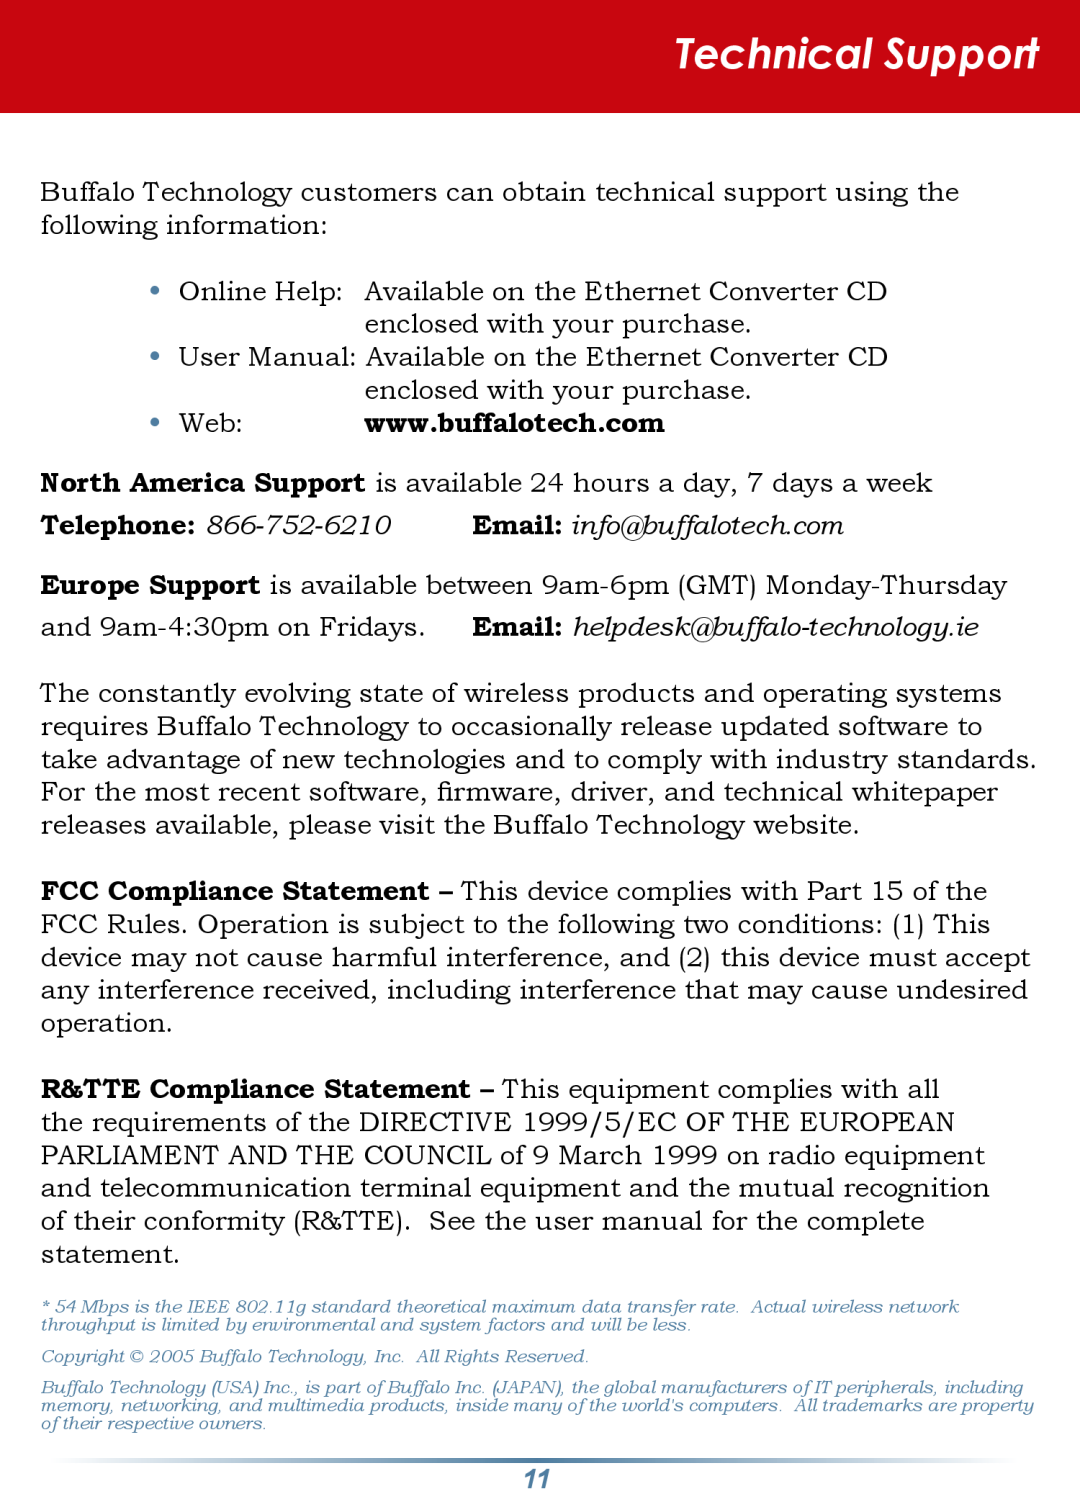 Buffalo Technology WLI-TX4-G54HP setup guide Technical Support, Telephone, Email info@buffalotech.com 